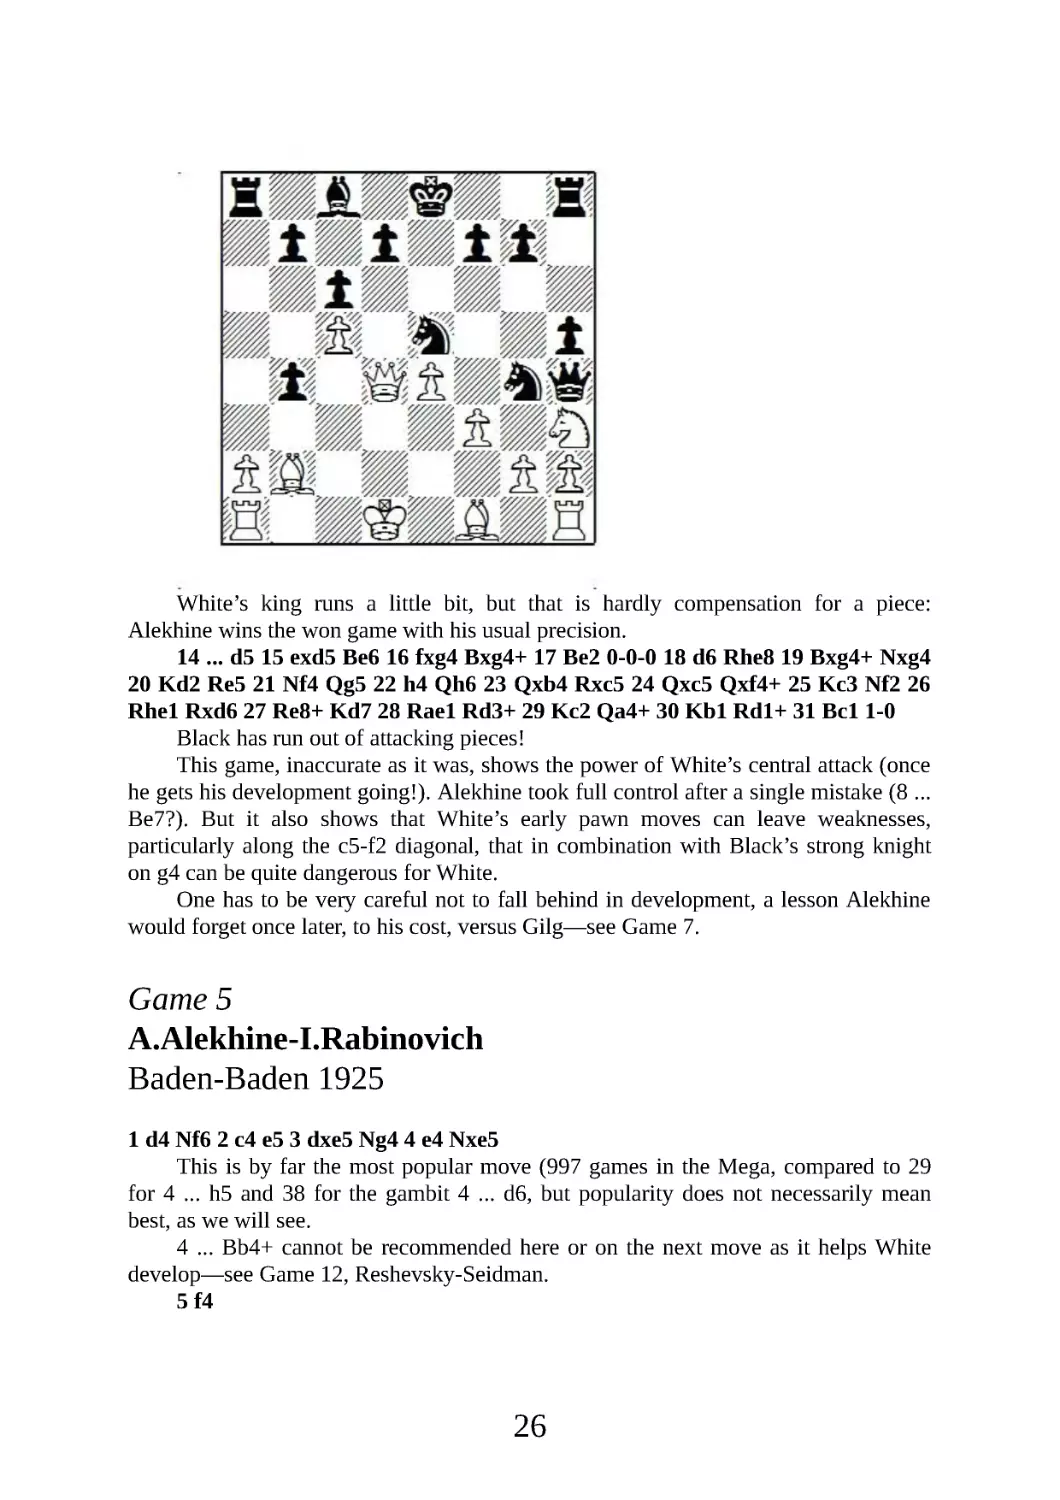 Alekhine.A-Rabinovich.I, Baden-Baden 1925